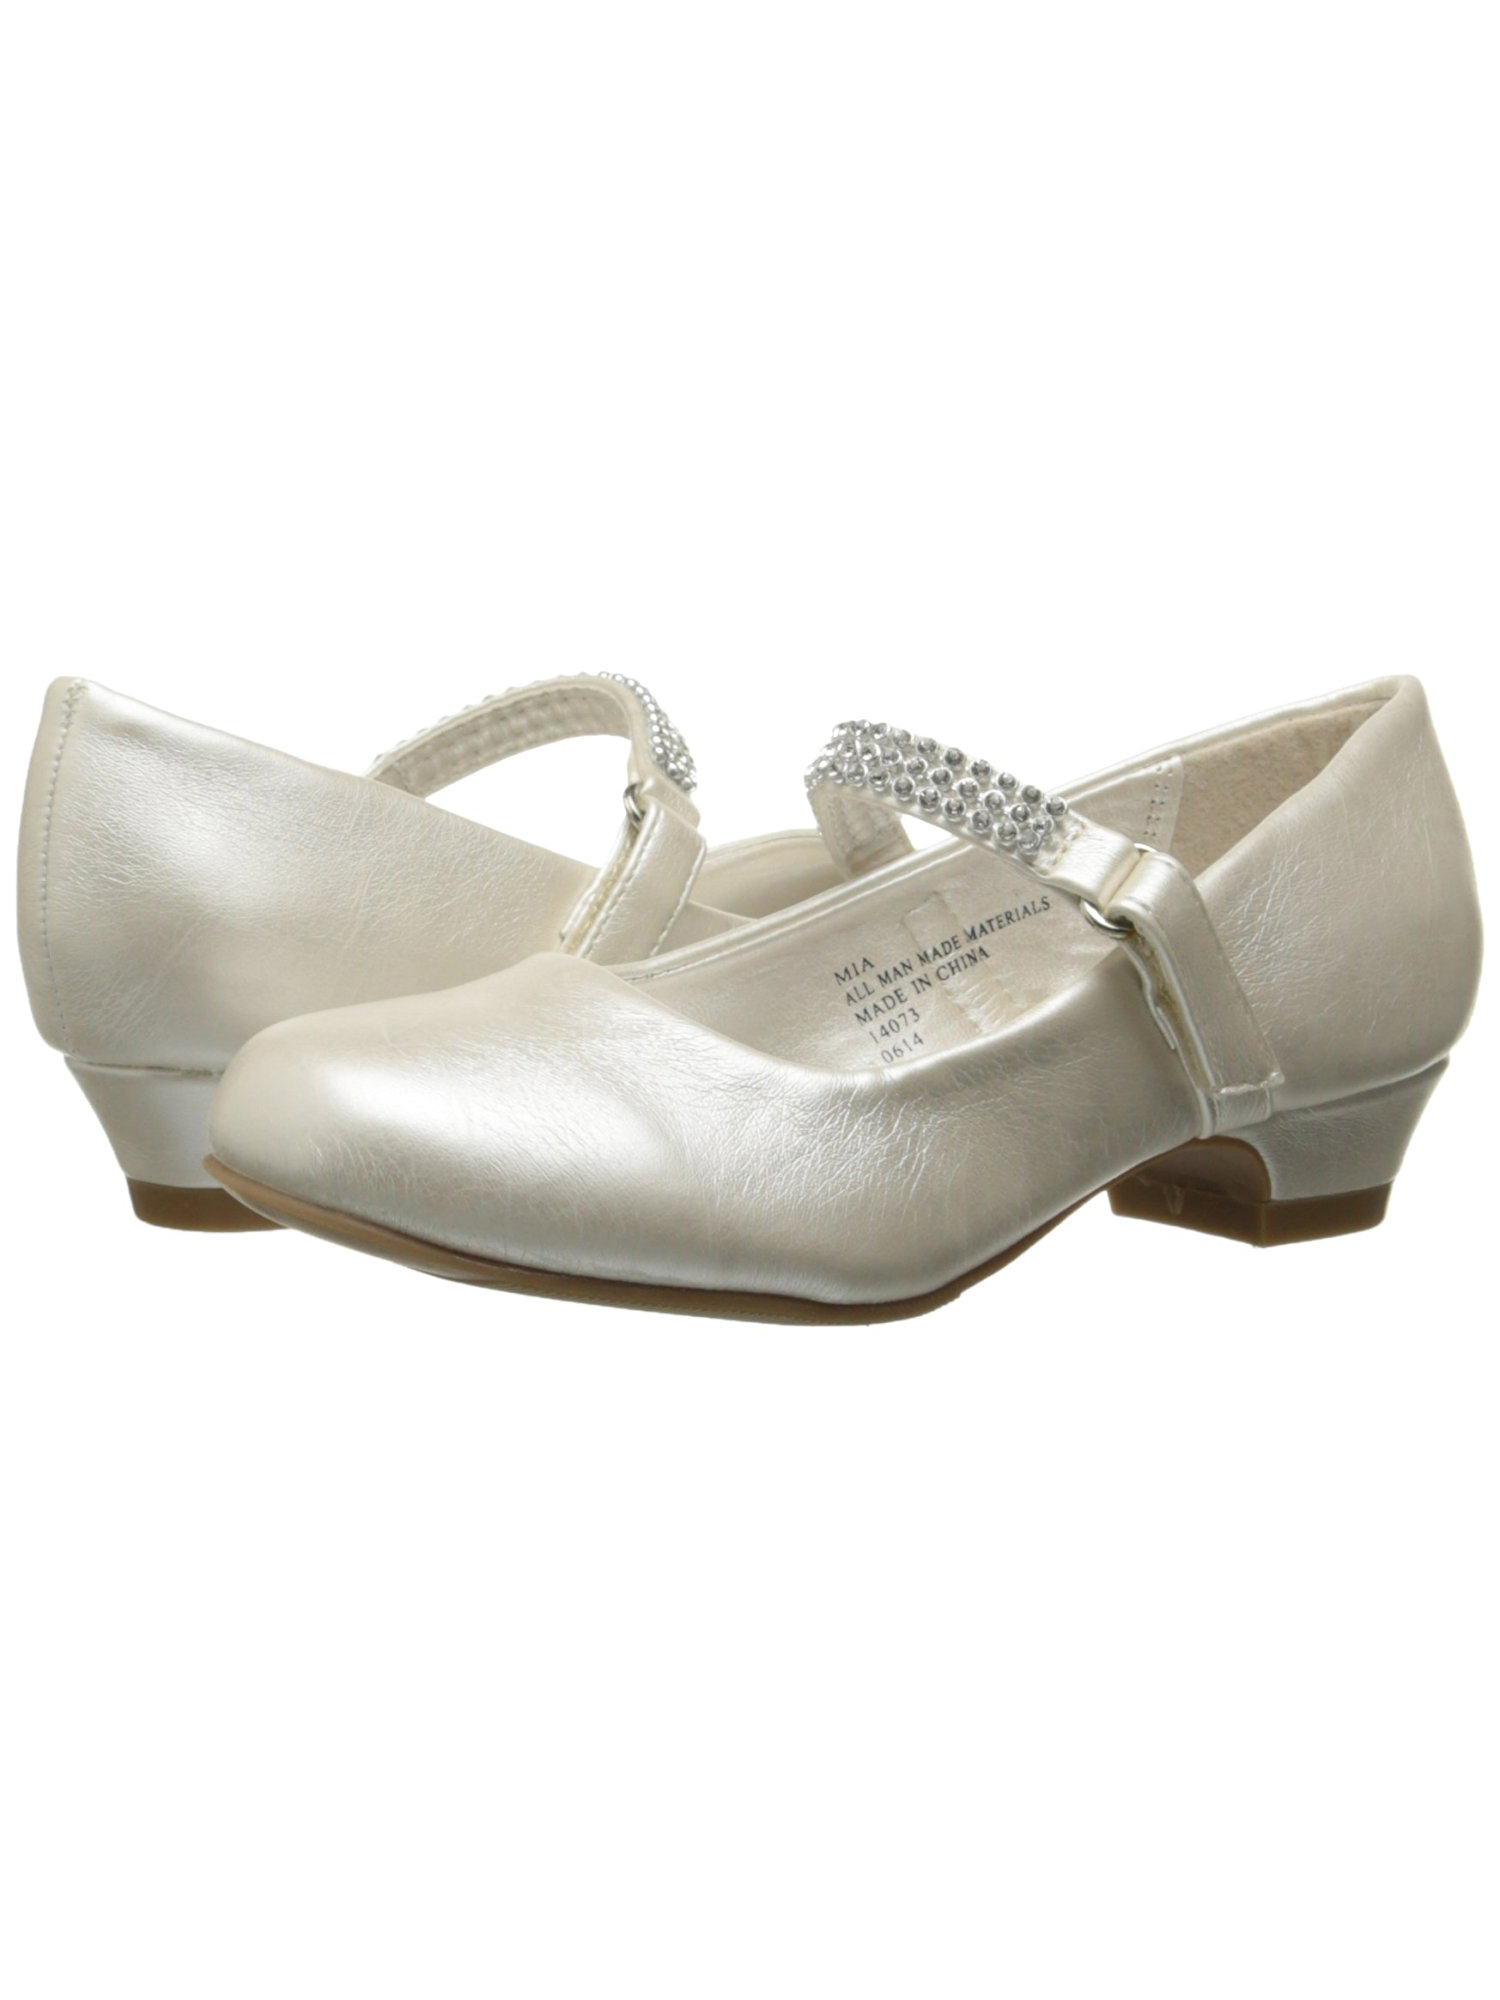 Girls Low Heel Dress Shoe With Rhinestone Strap (1, White)